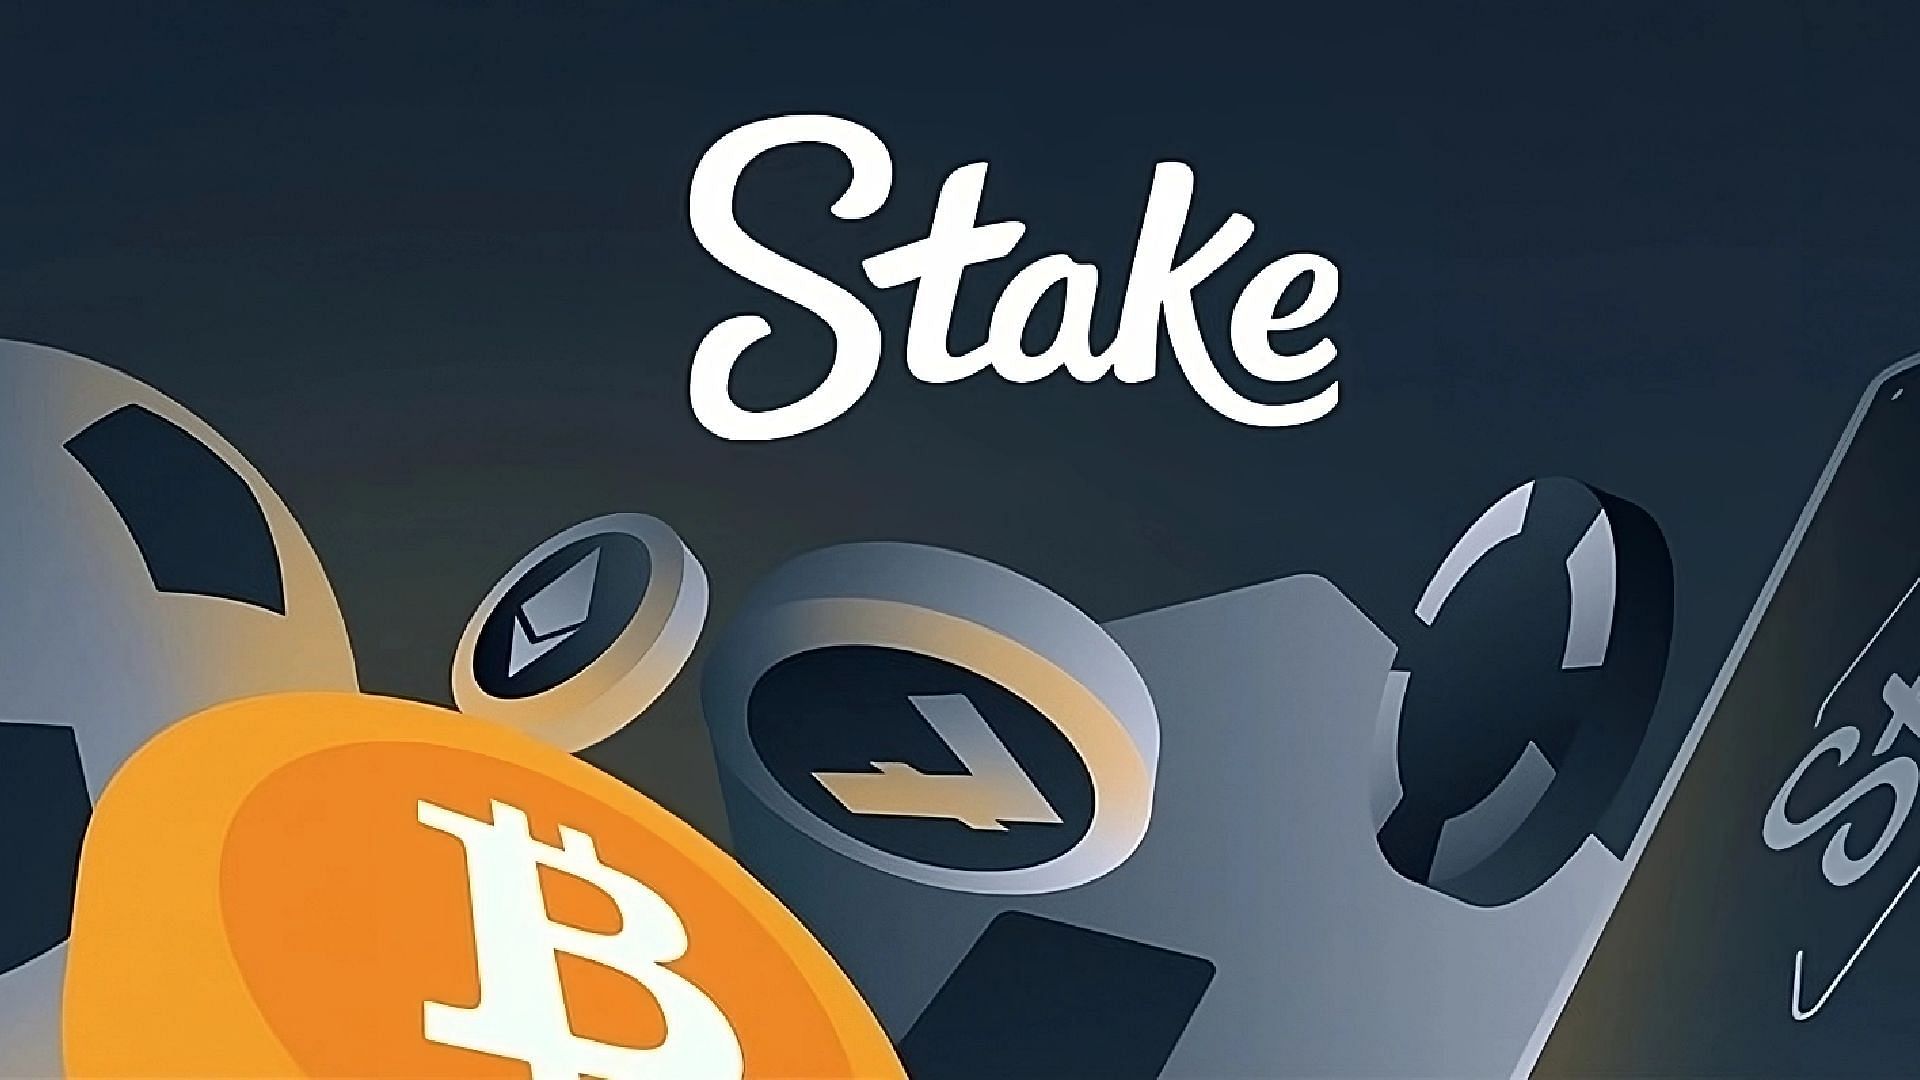 Stake was hacked for $41 million says reports (Image via Sportskeeda)